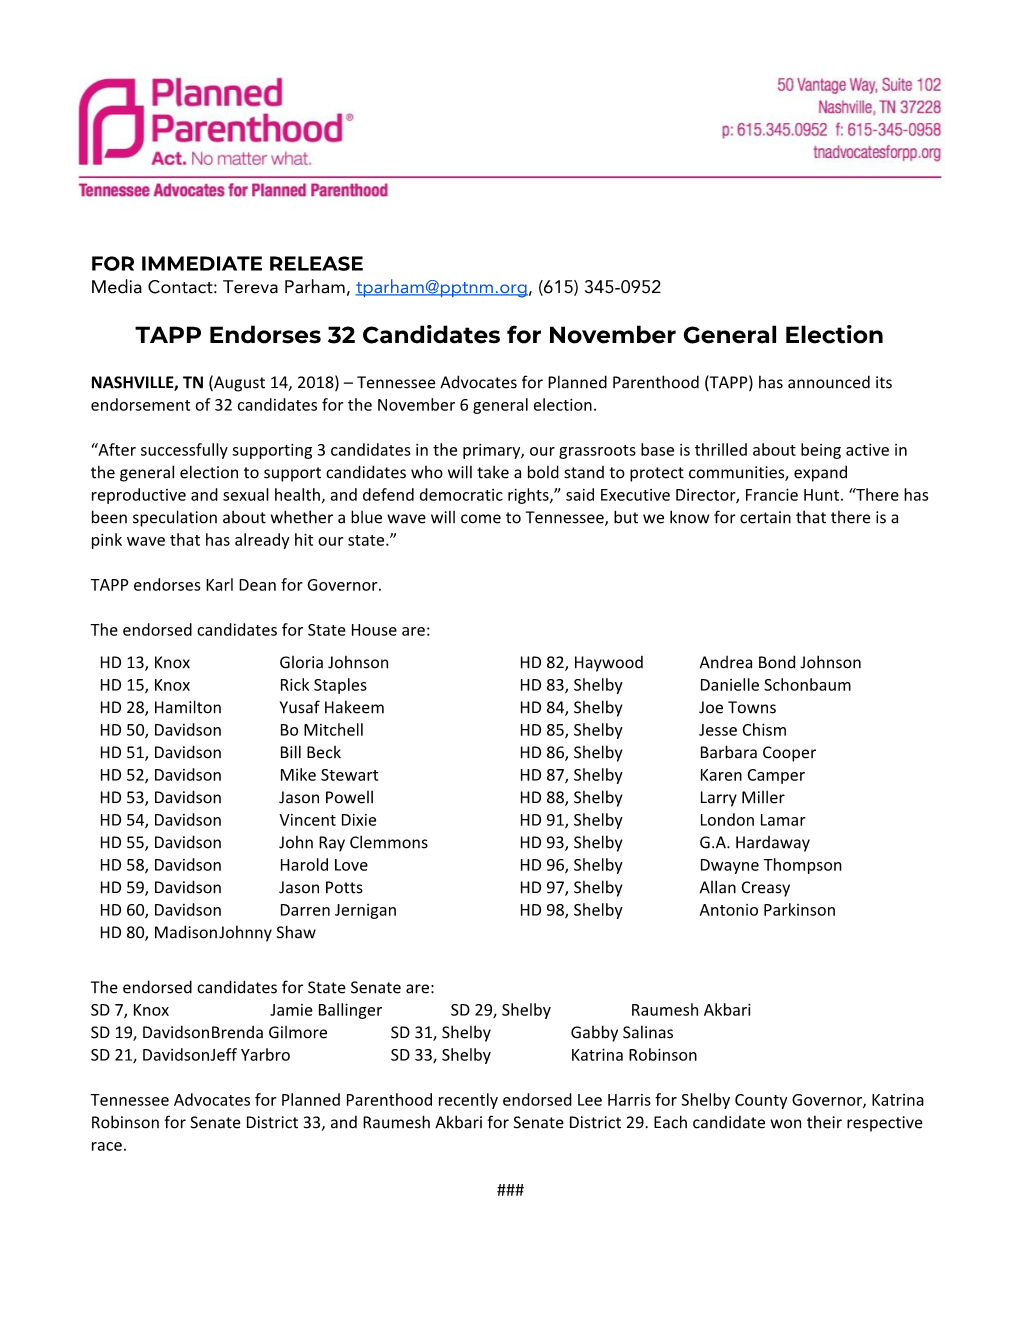 TAPP Endorses 32 Candidates for November General Election